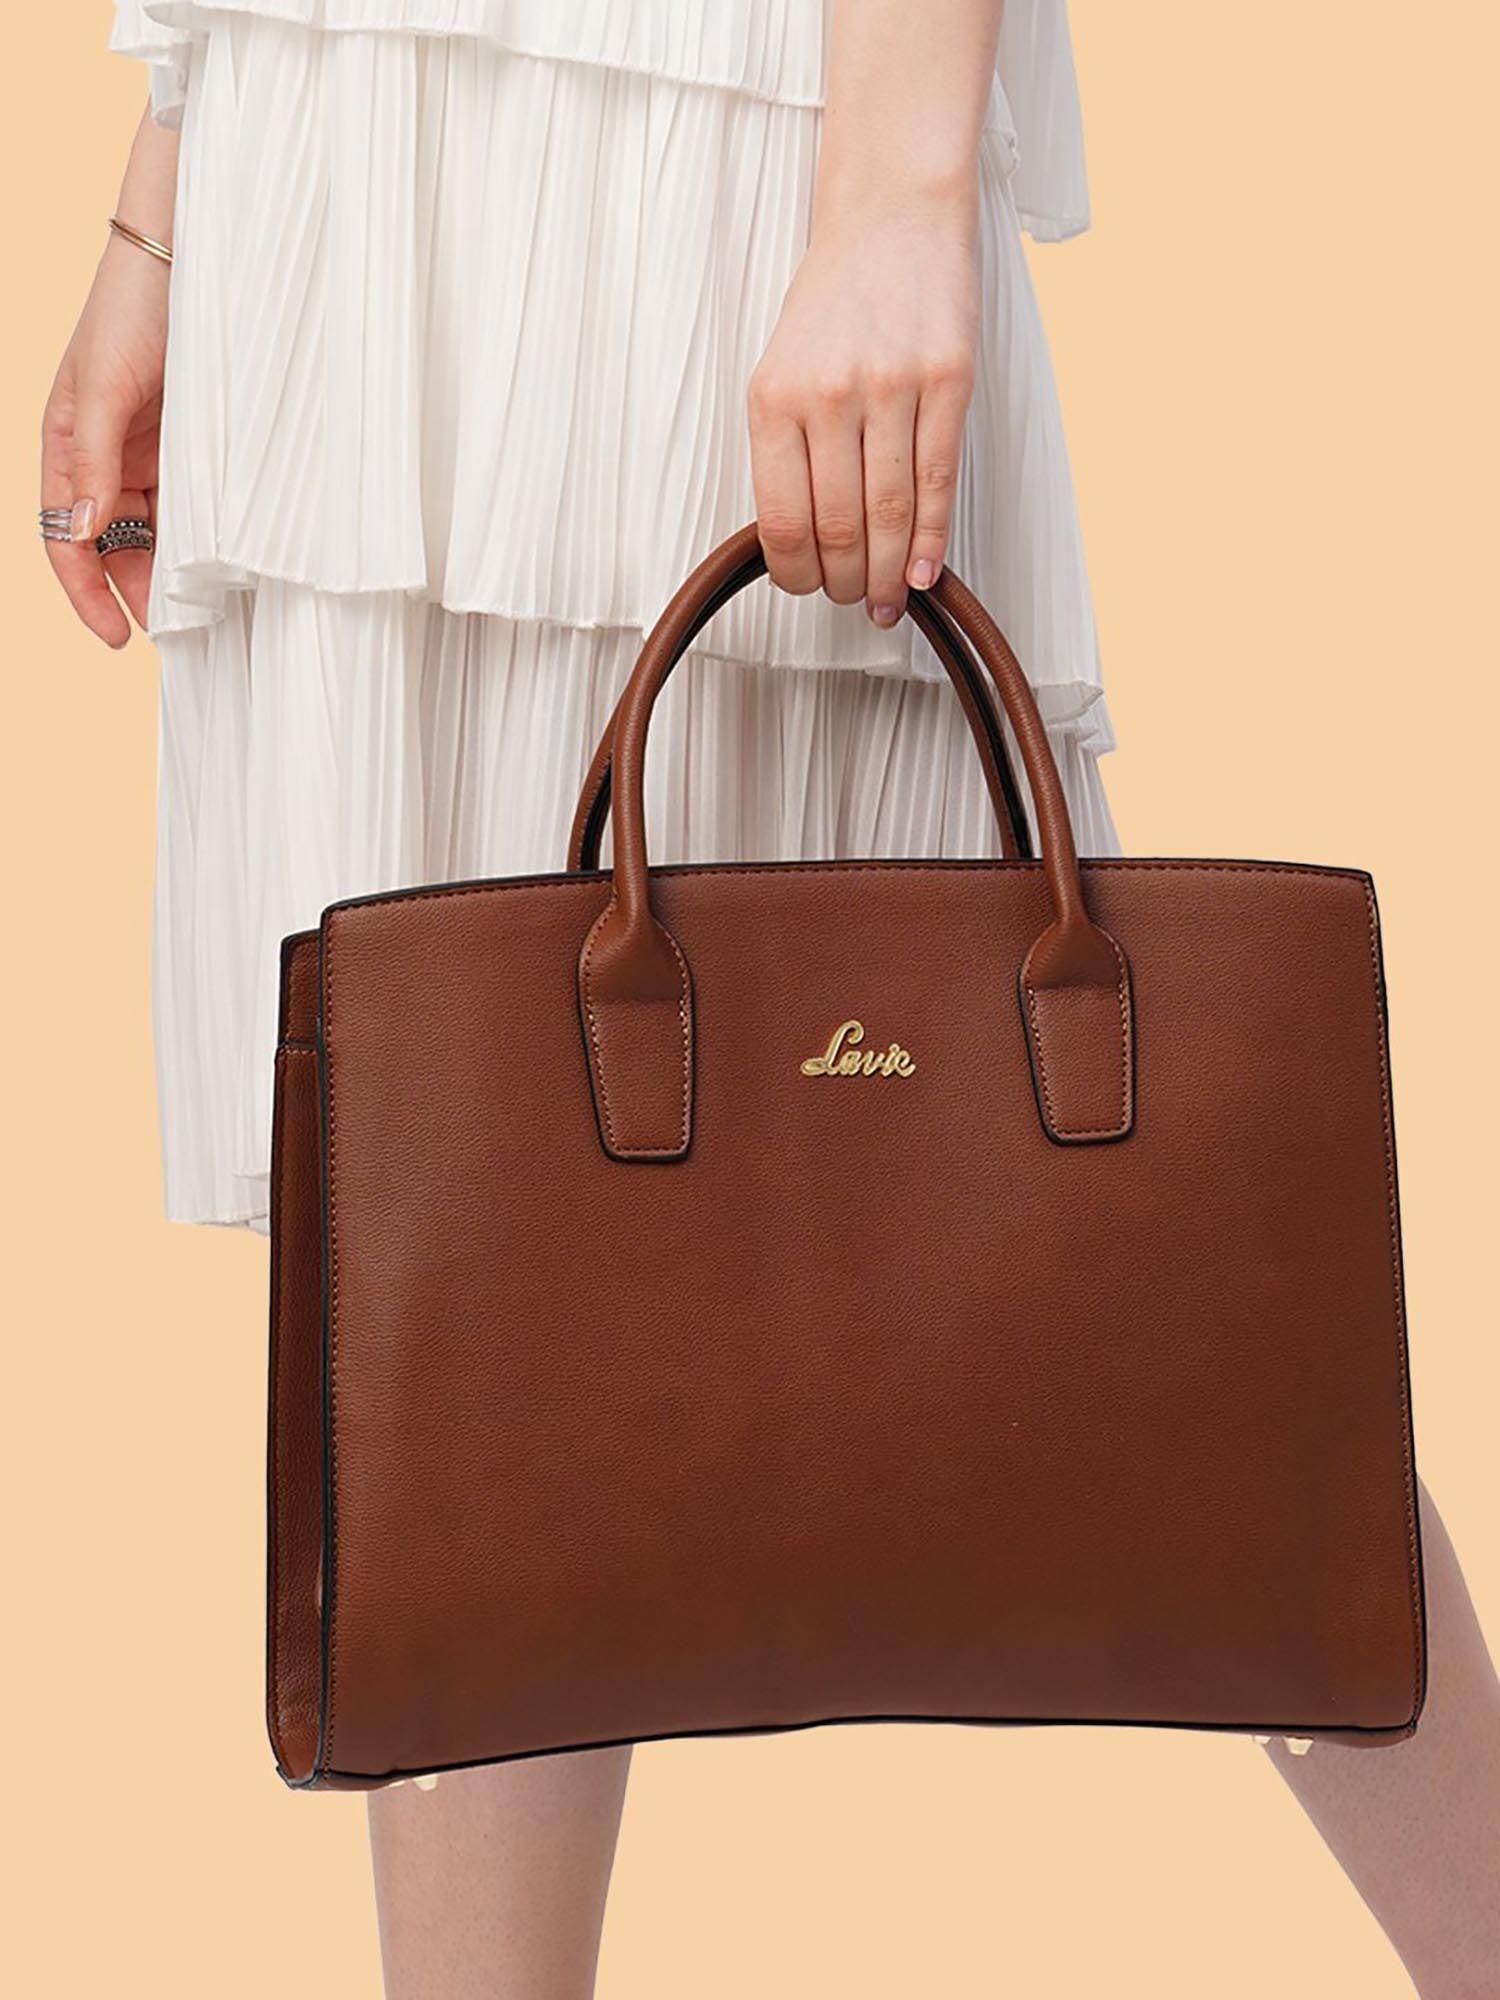 ellon women's laptop handbag (brown)